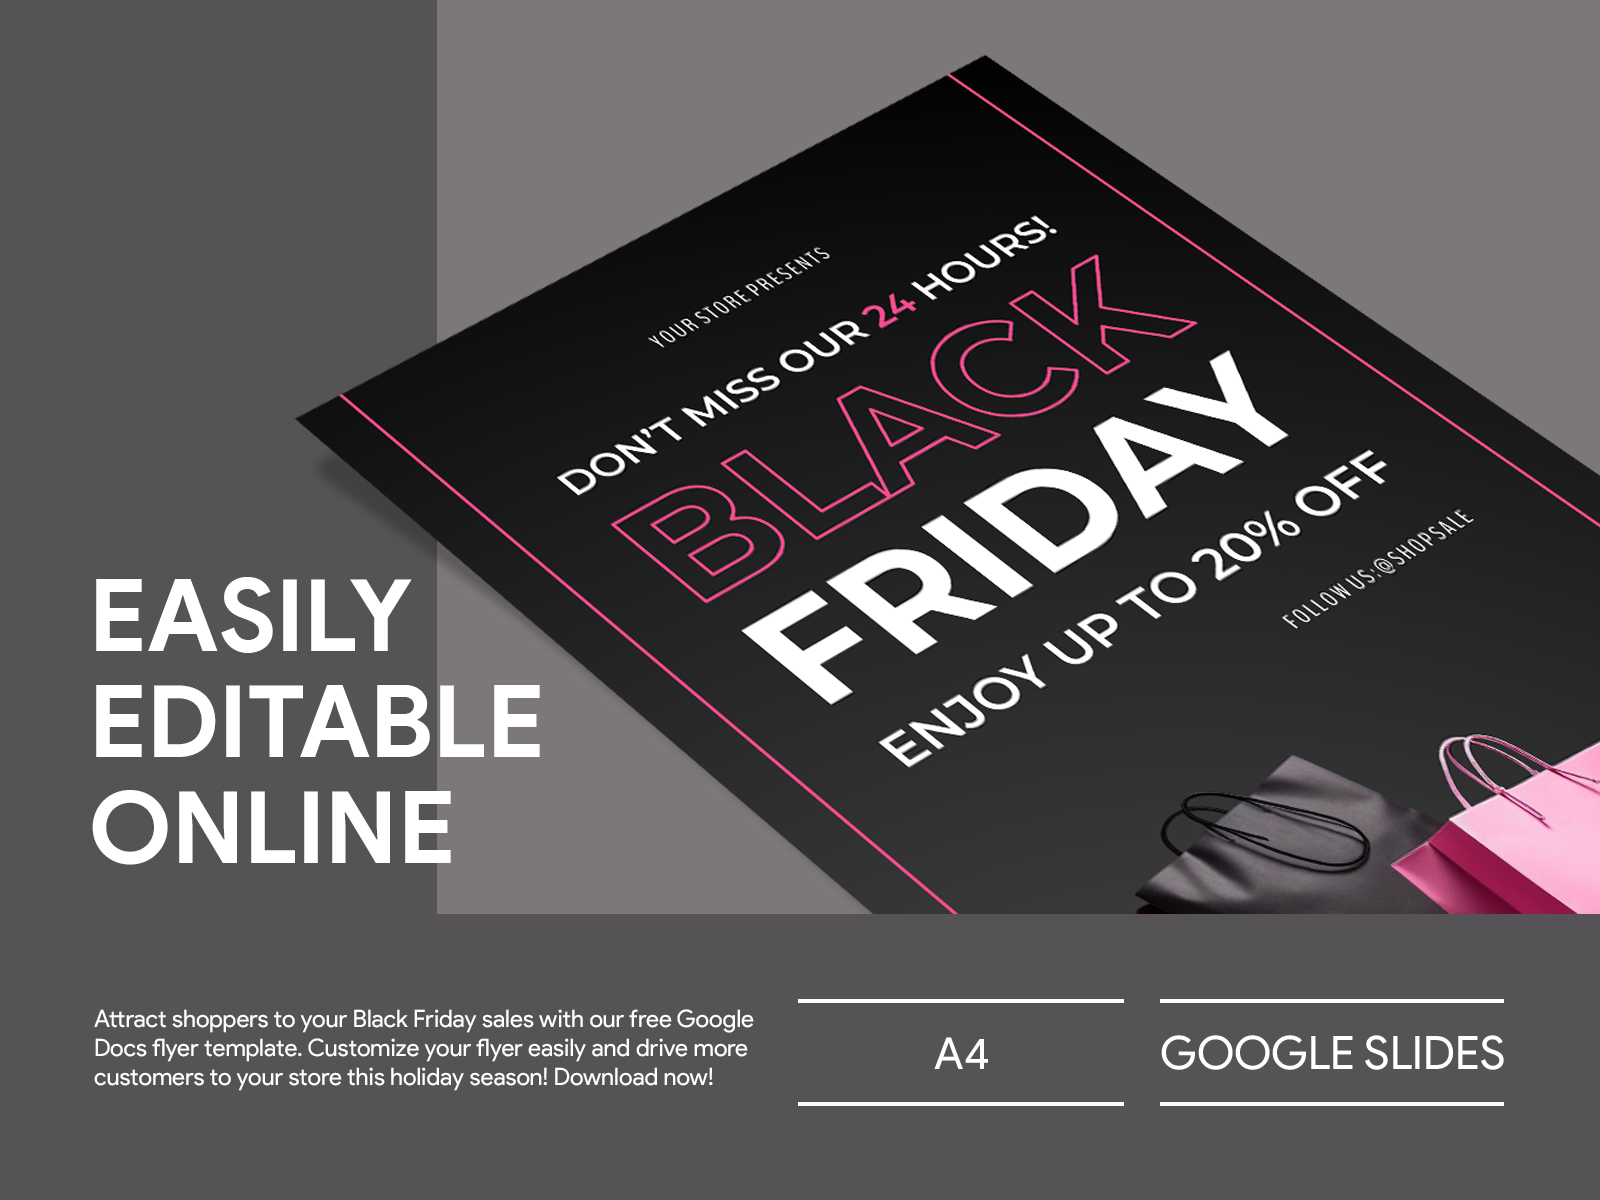 Free custom printable Black Friday flyer templates